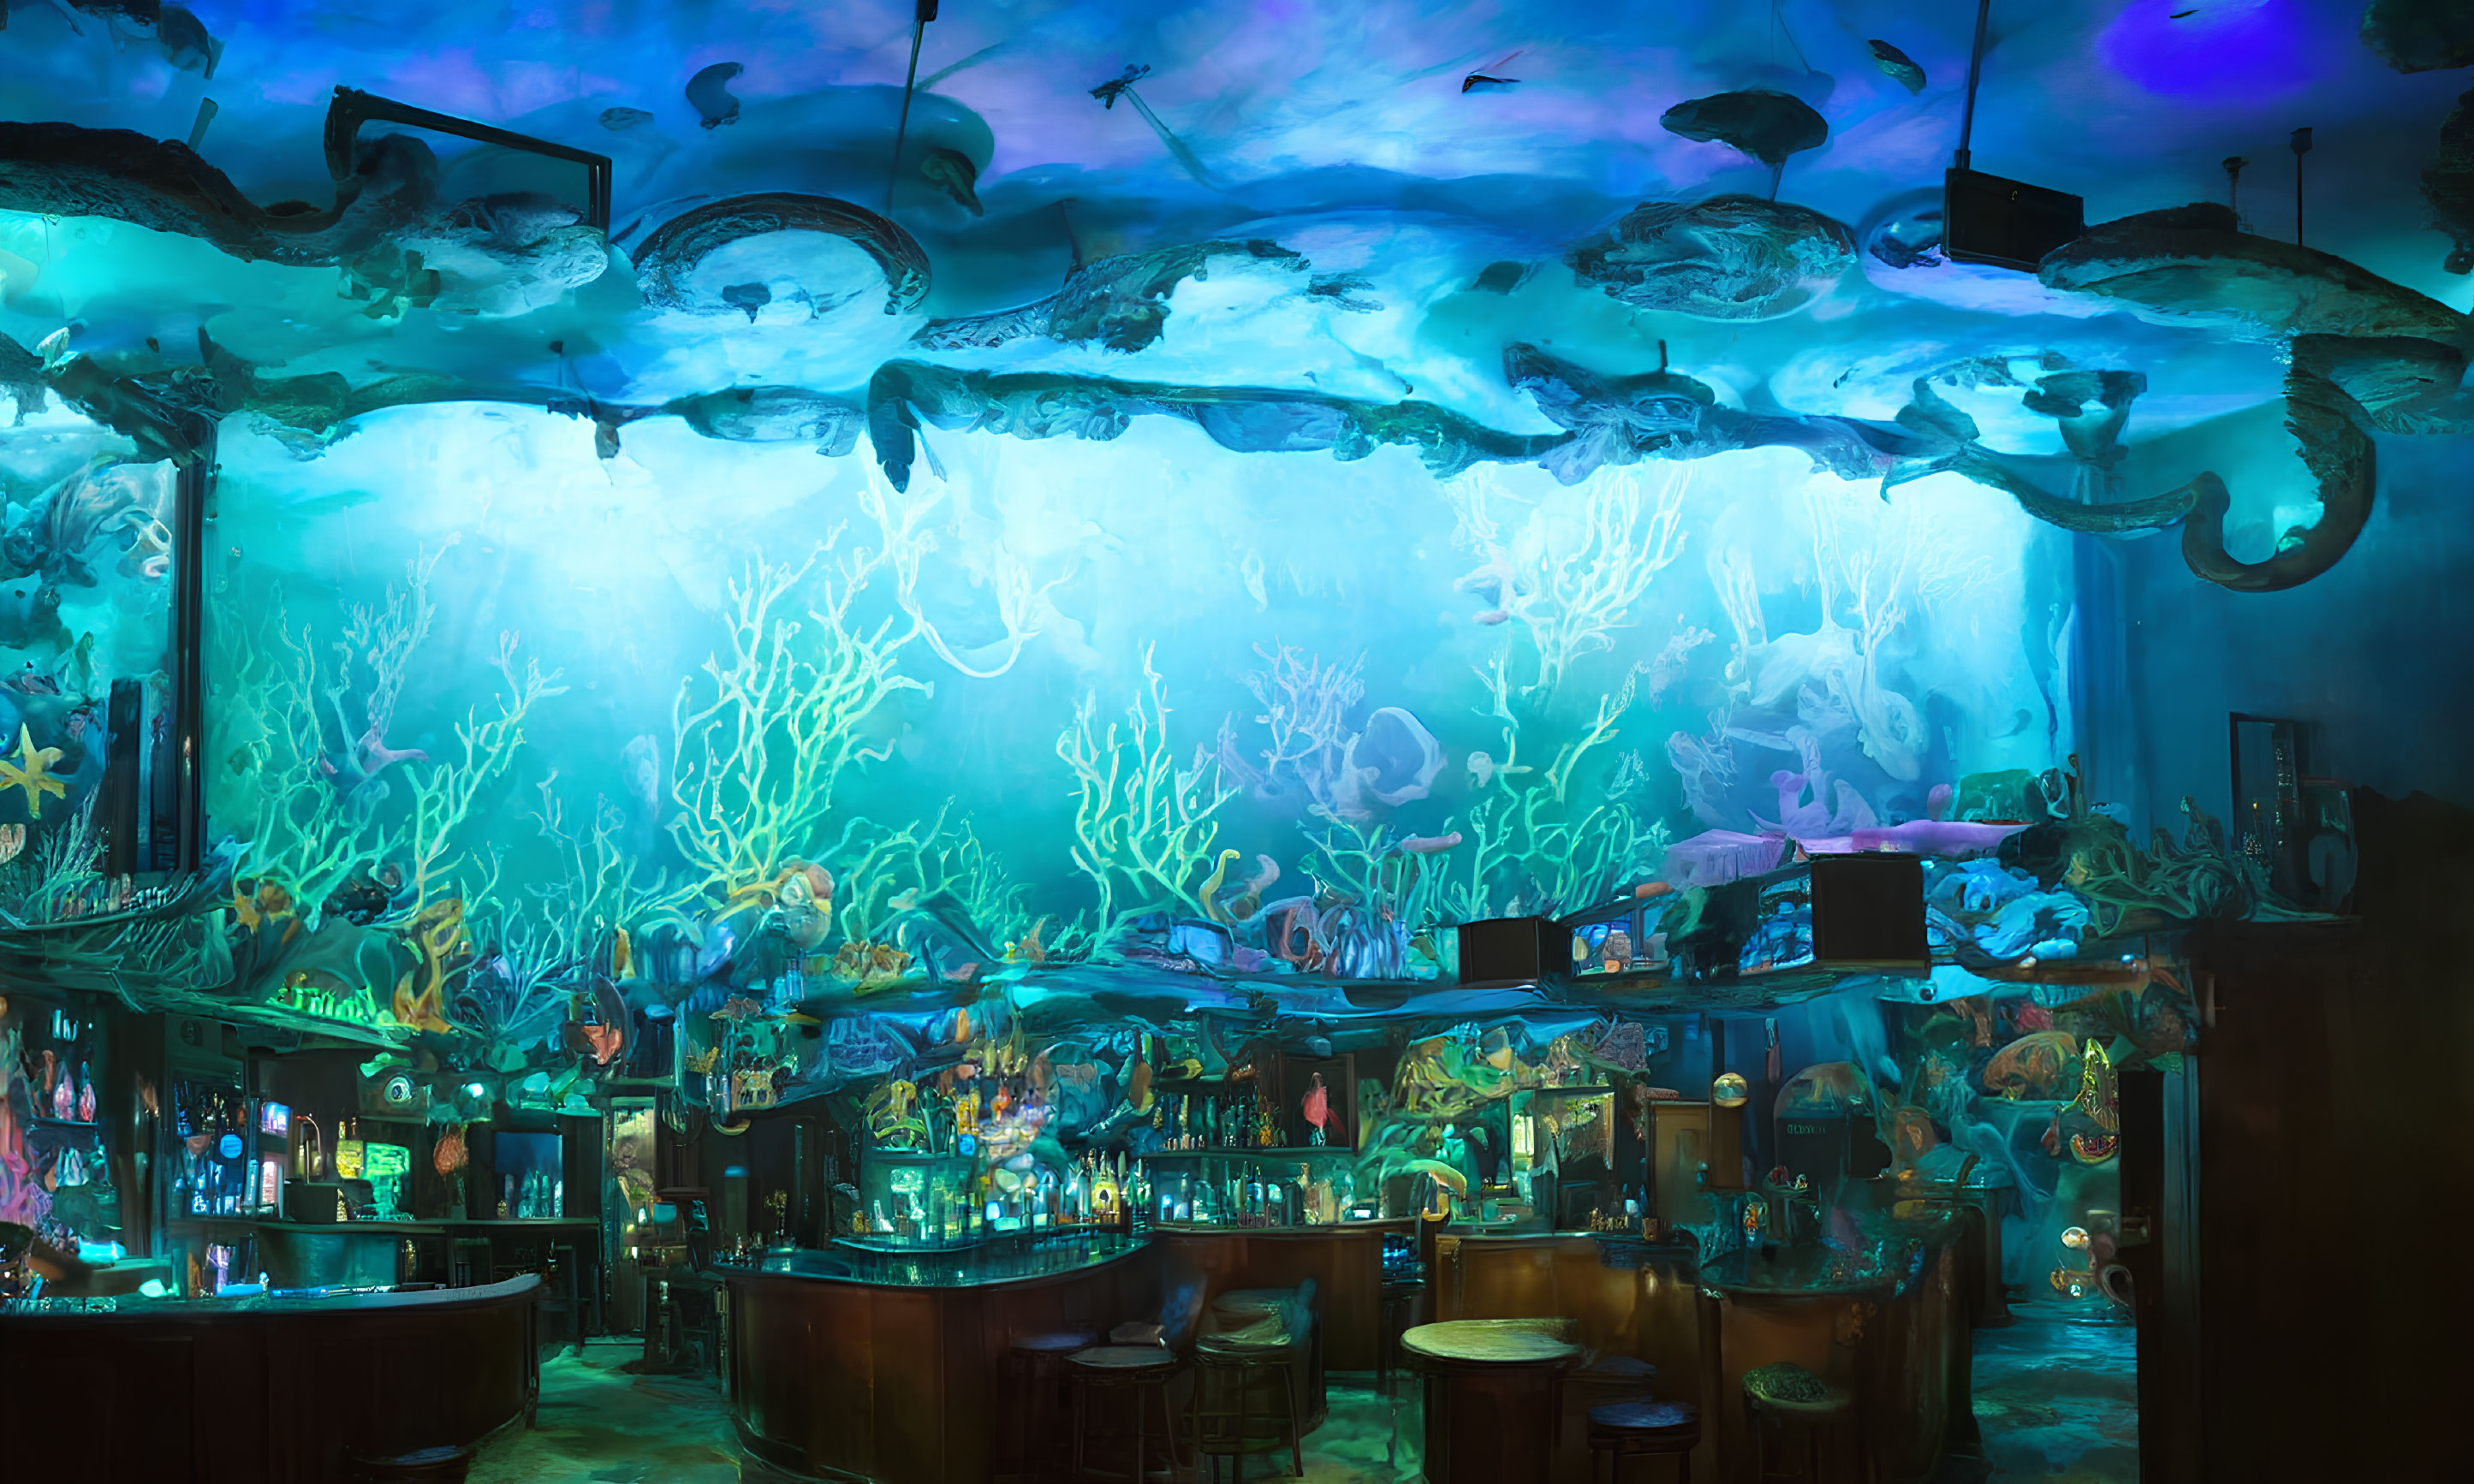 Vibrant Blue Lighting and Sea Creature Decor in Underwater Bar